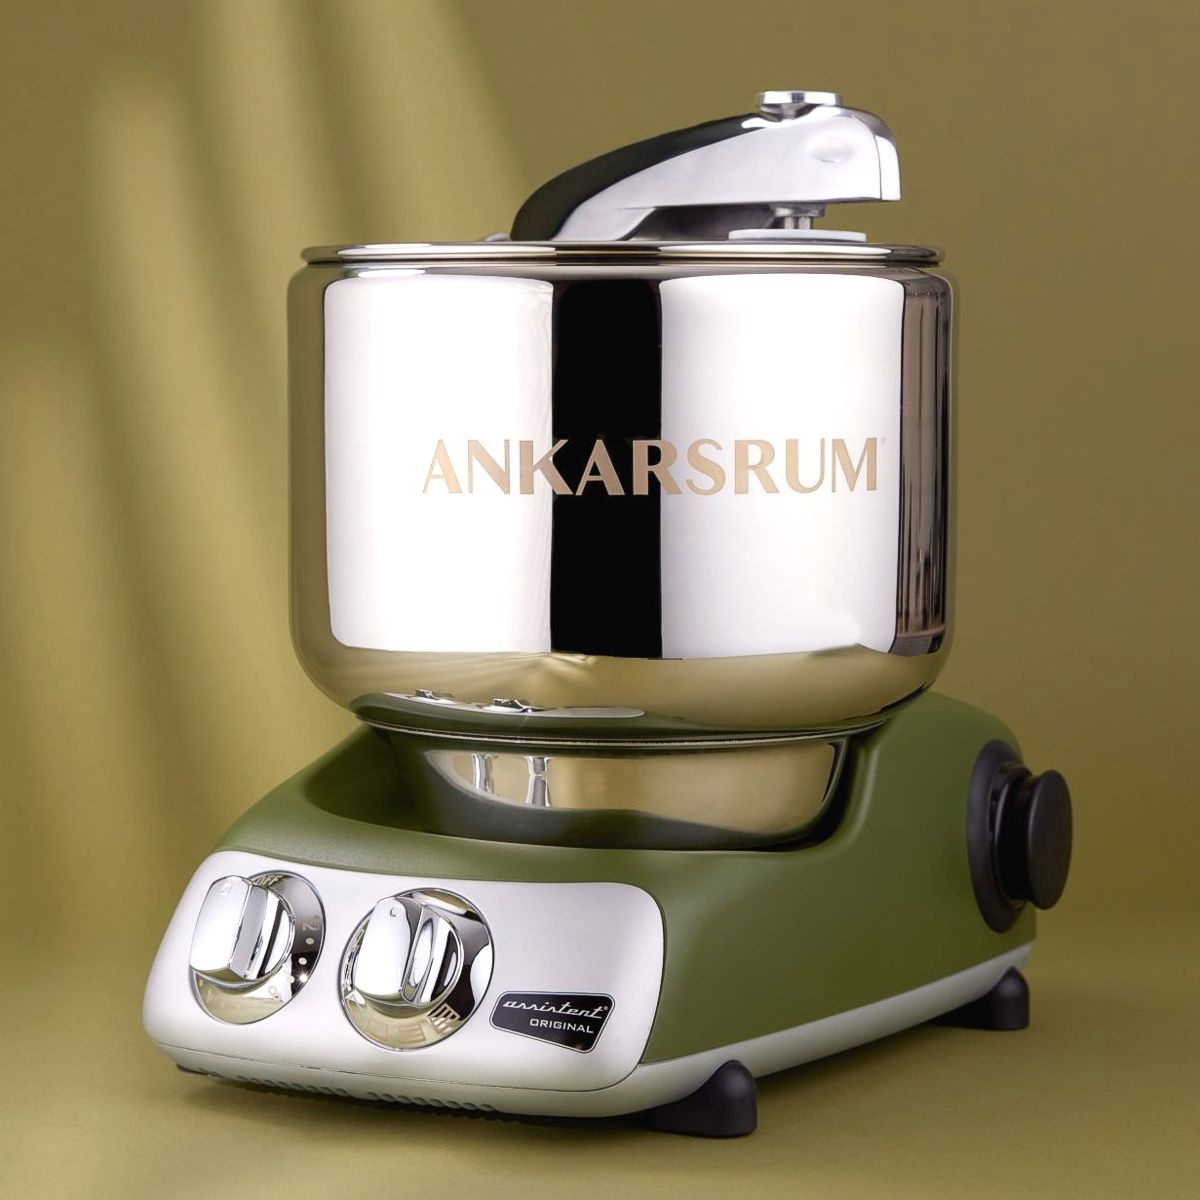 Ankarsrum Original Mixer Olive Green